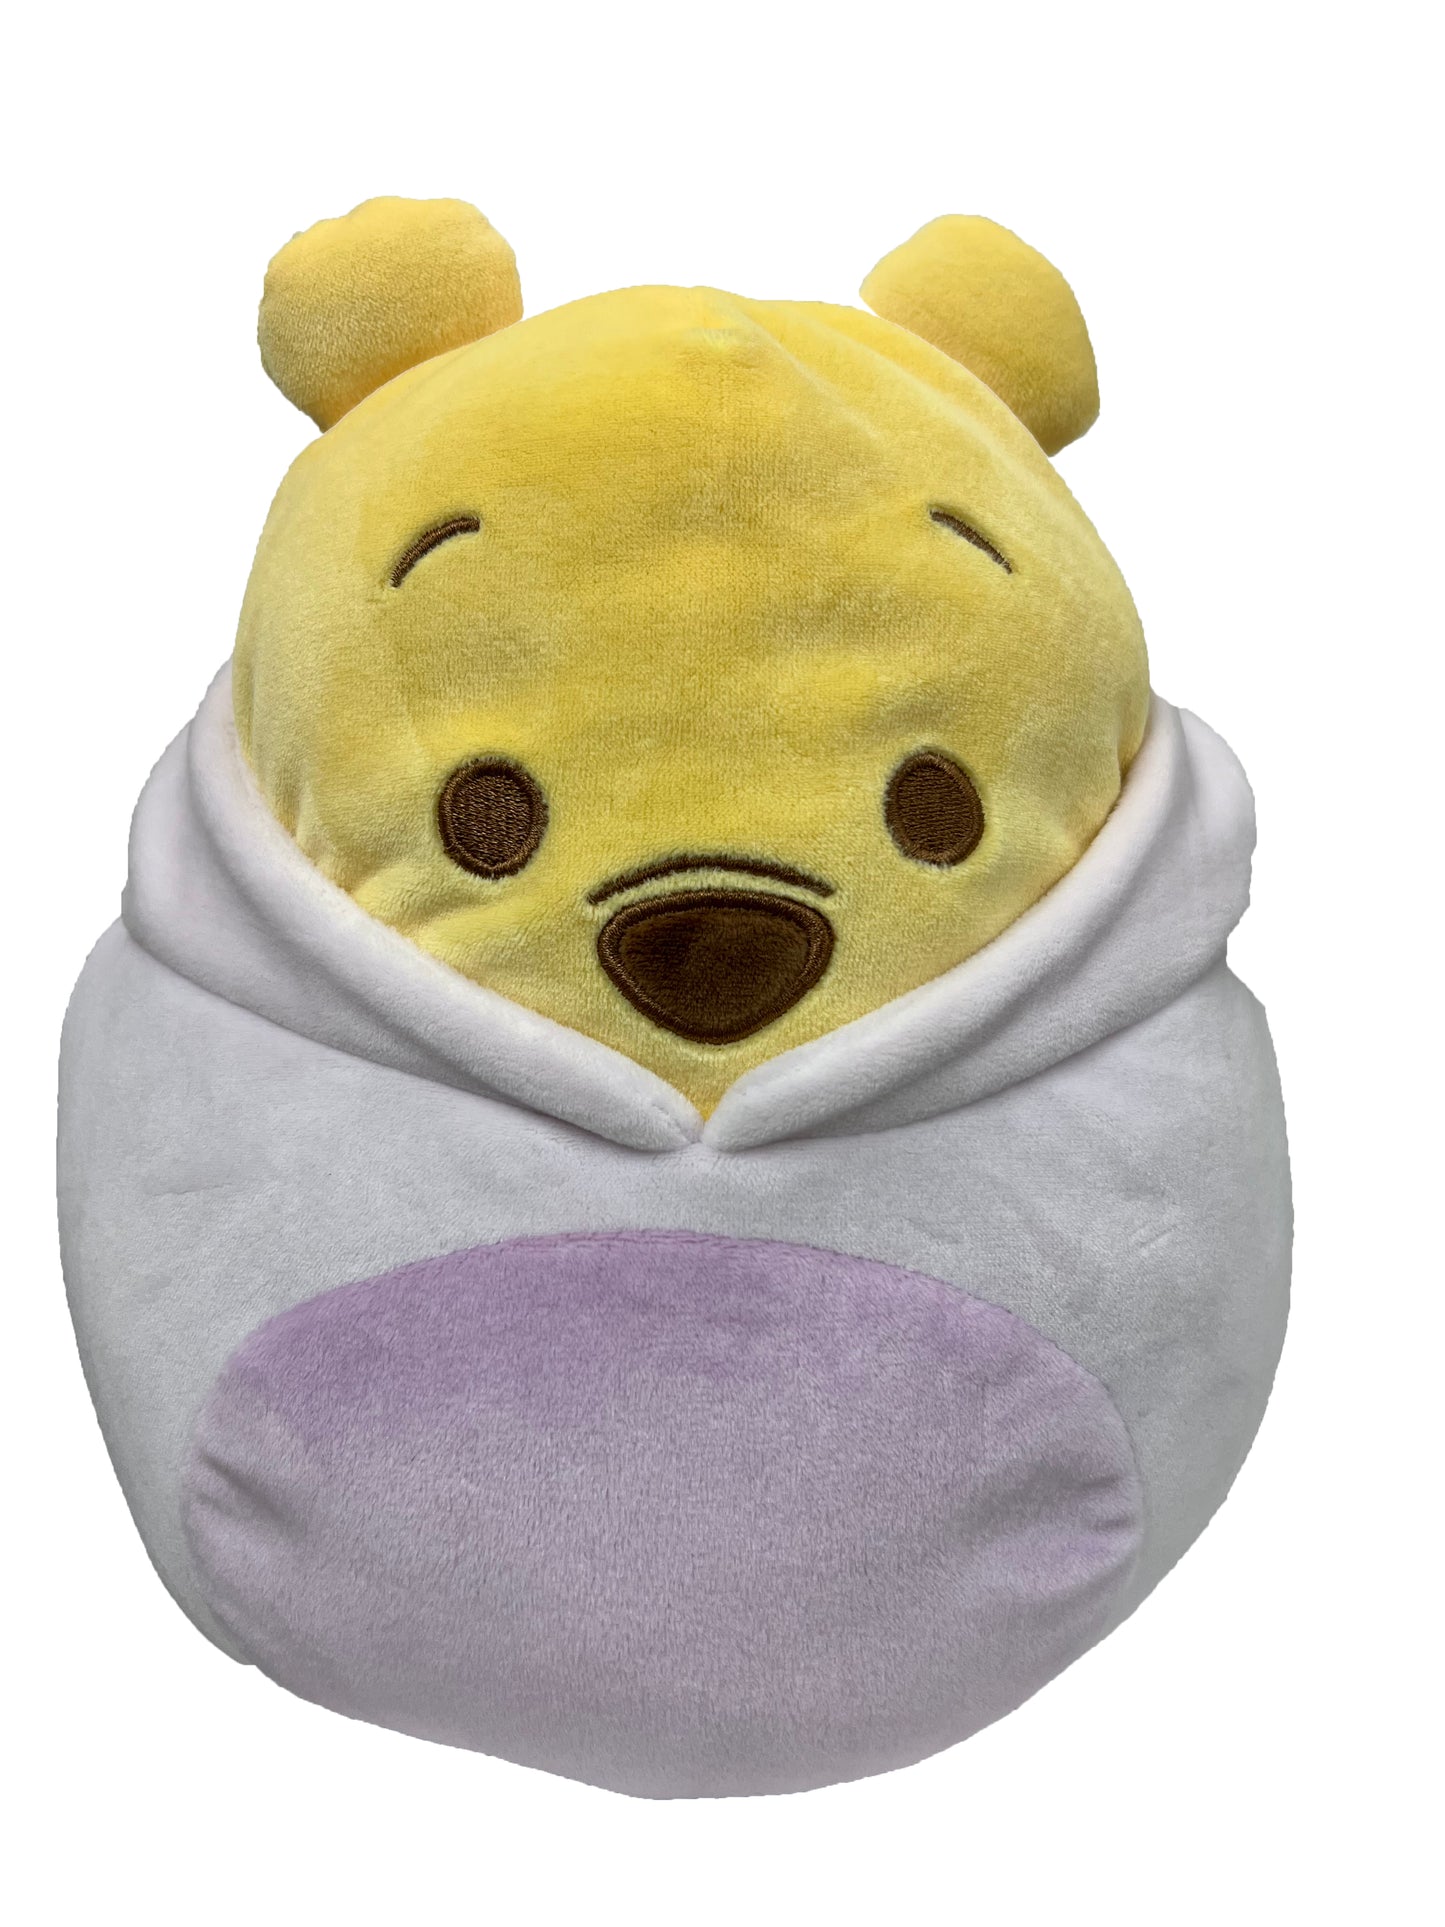 8” Disney Squishmallows “Peeking Pooh” in Bunny Costume